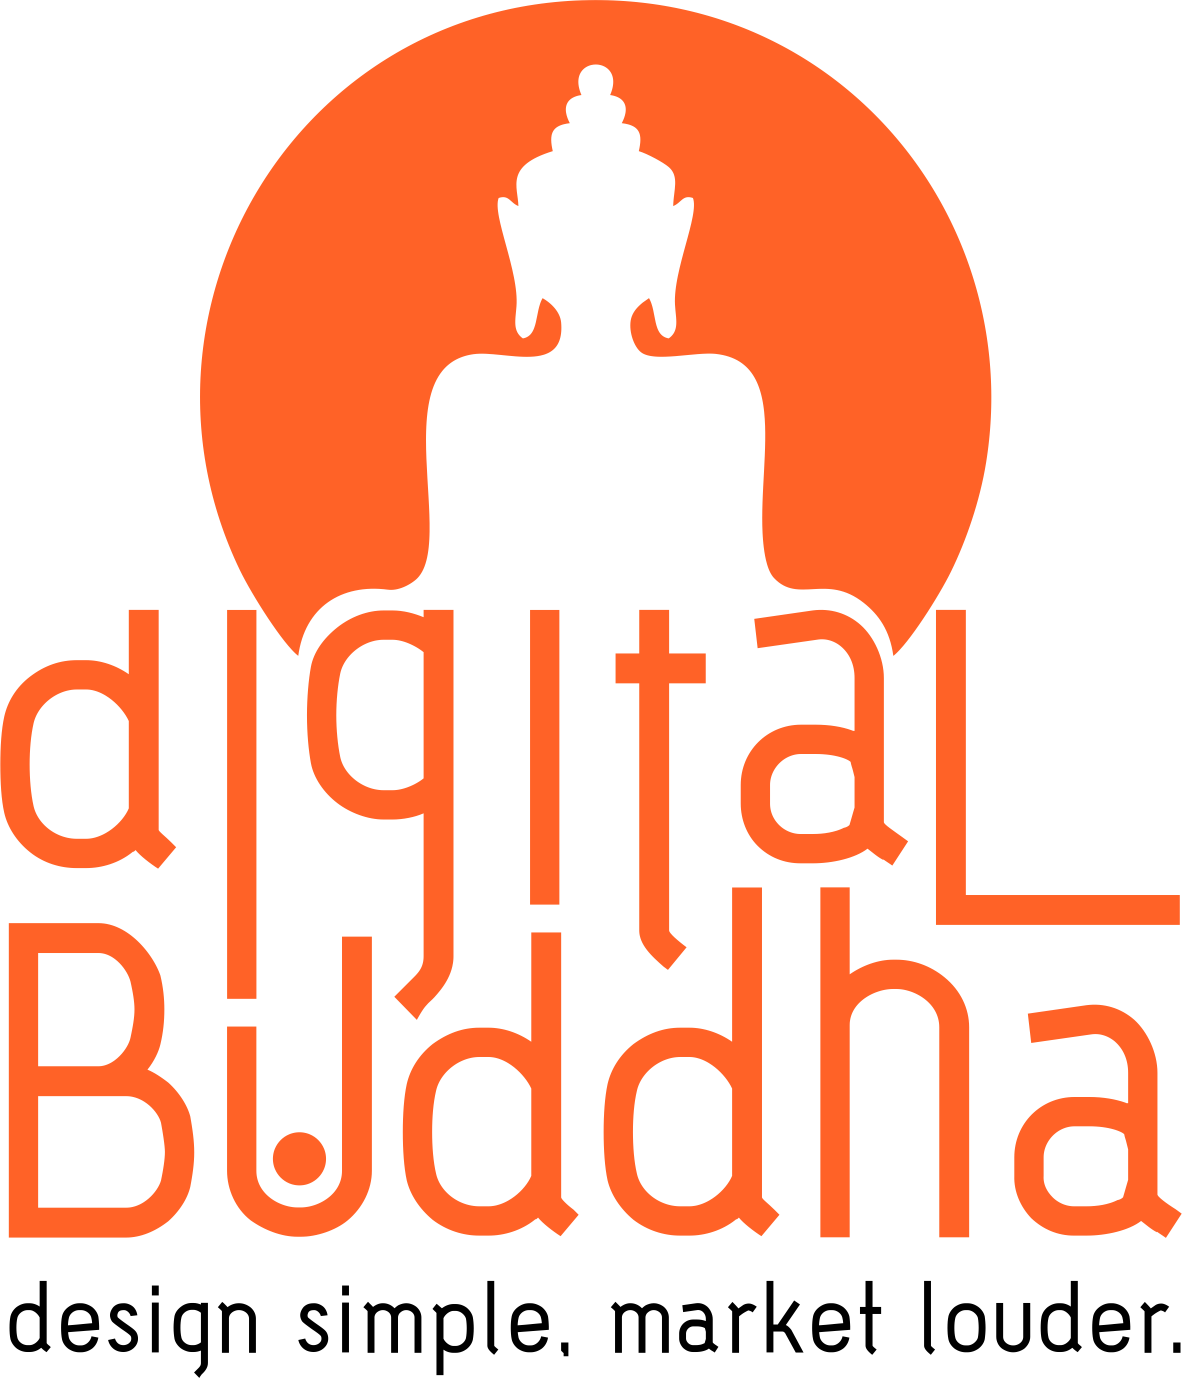 Digital Buddha Technologies